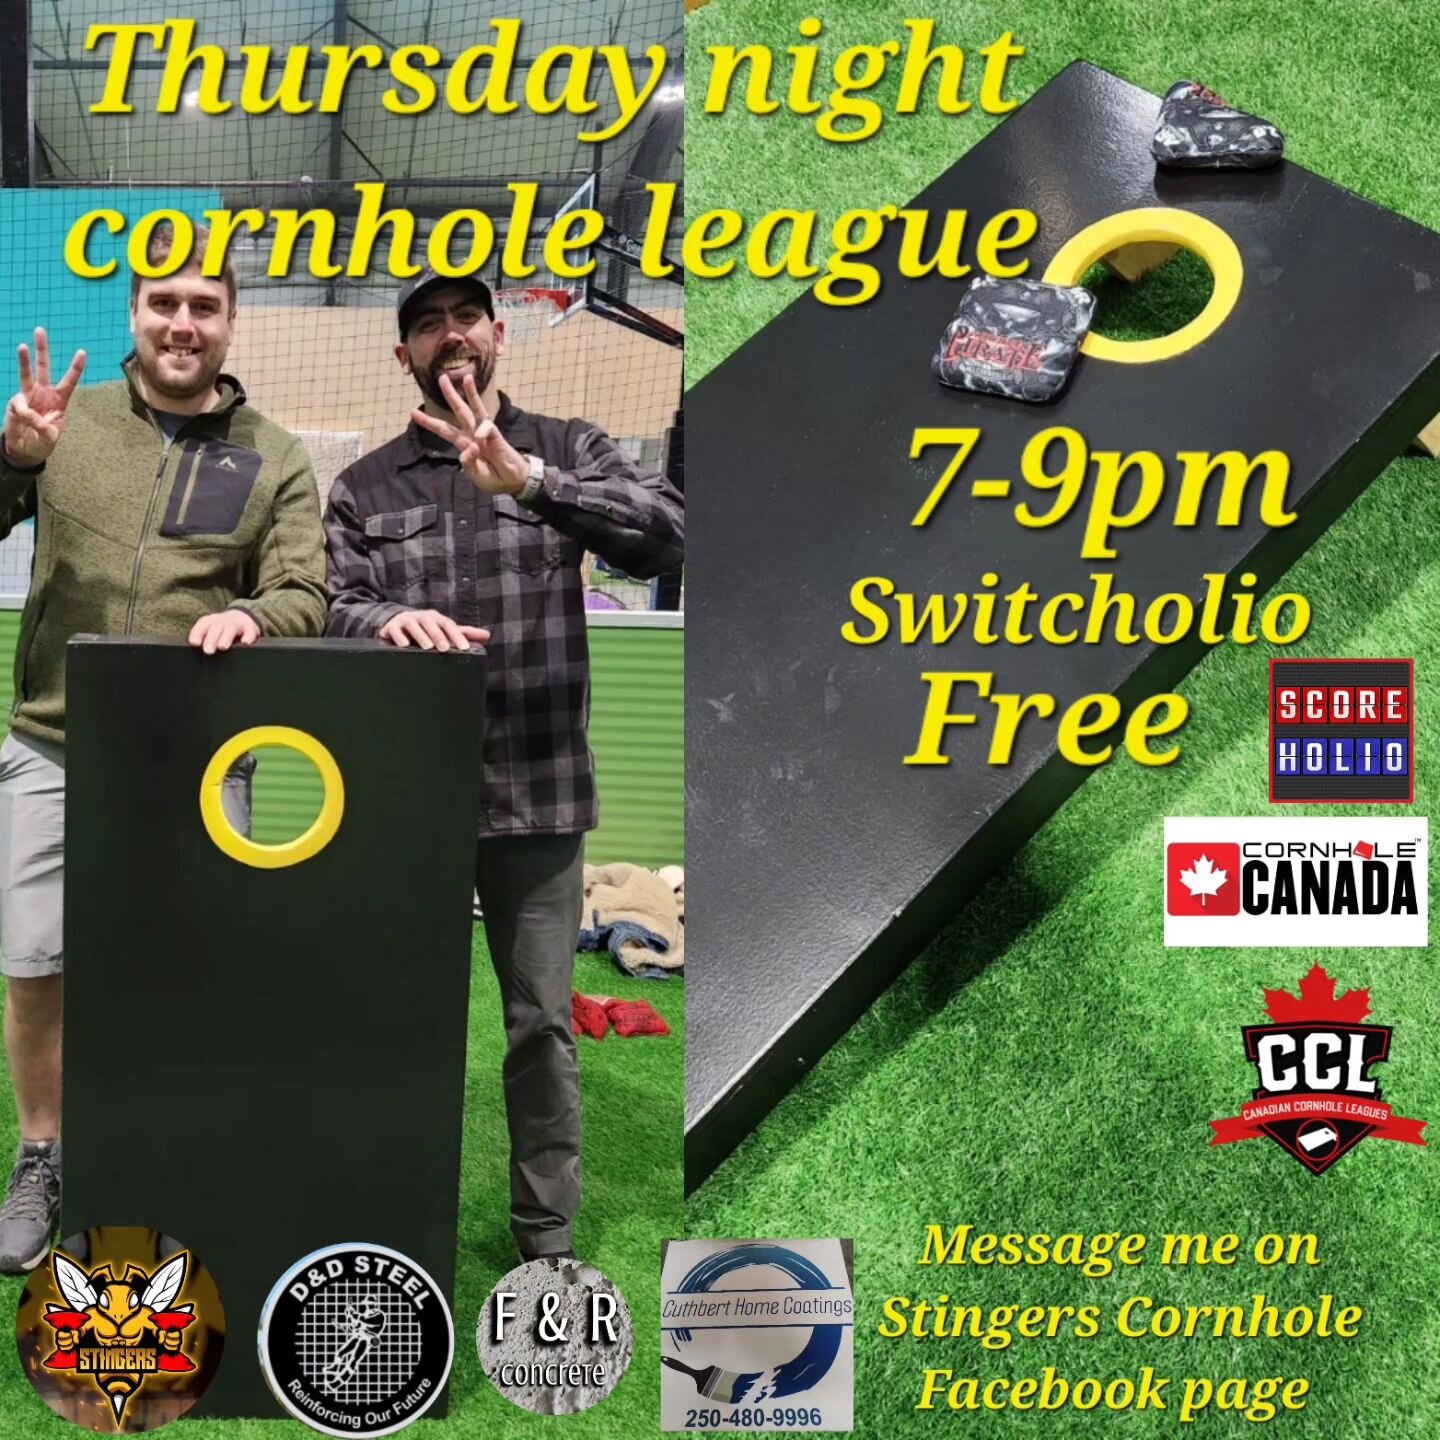 Thursday night, try cornhole free. Pre registration up on scoreholio.